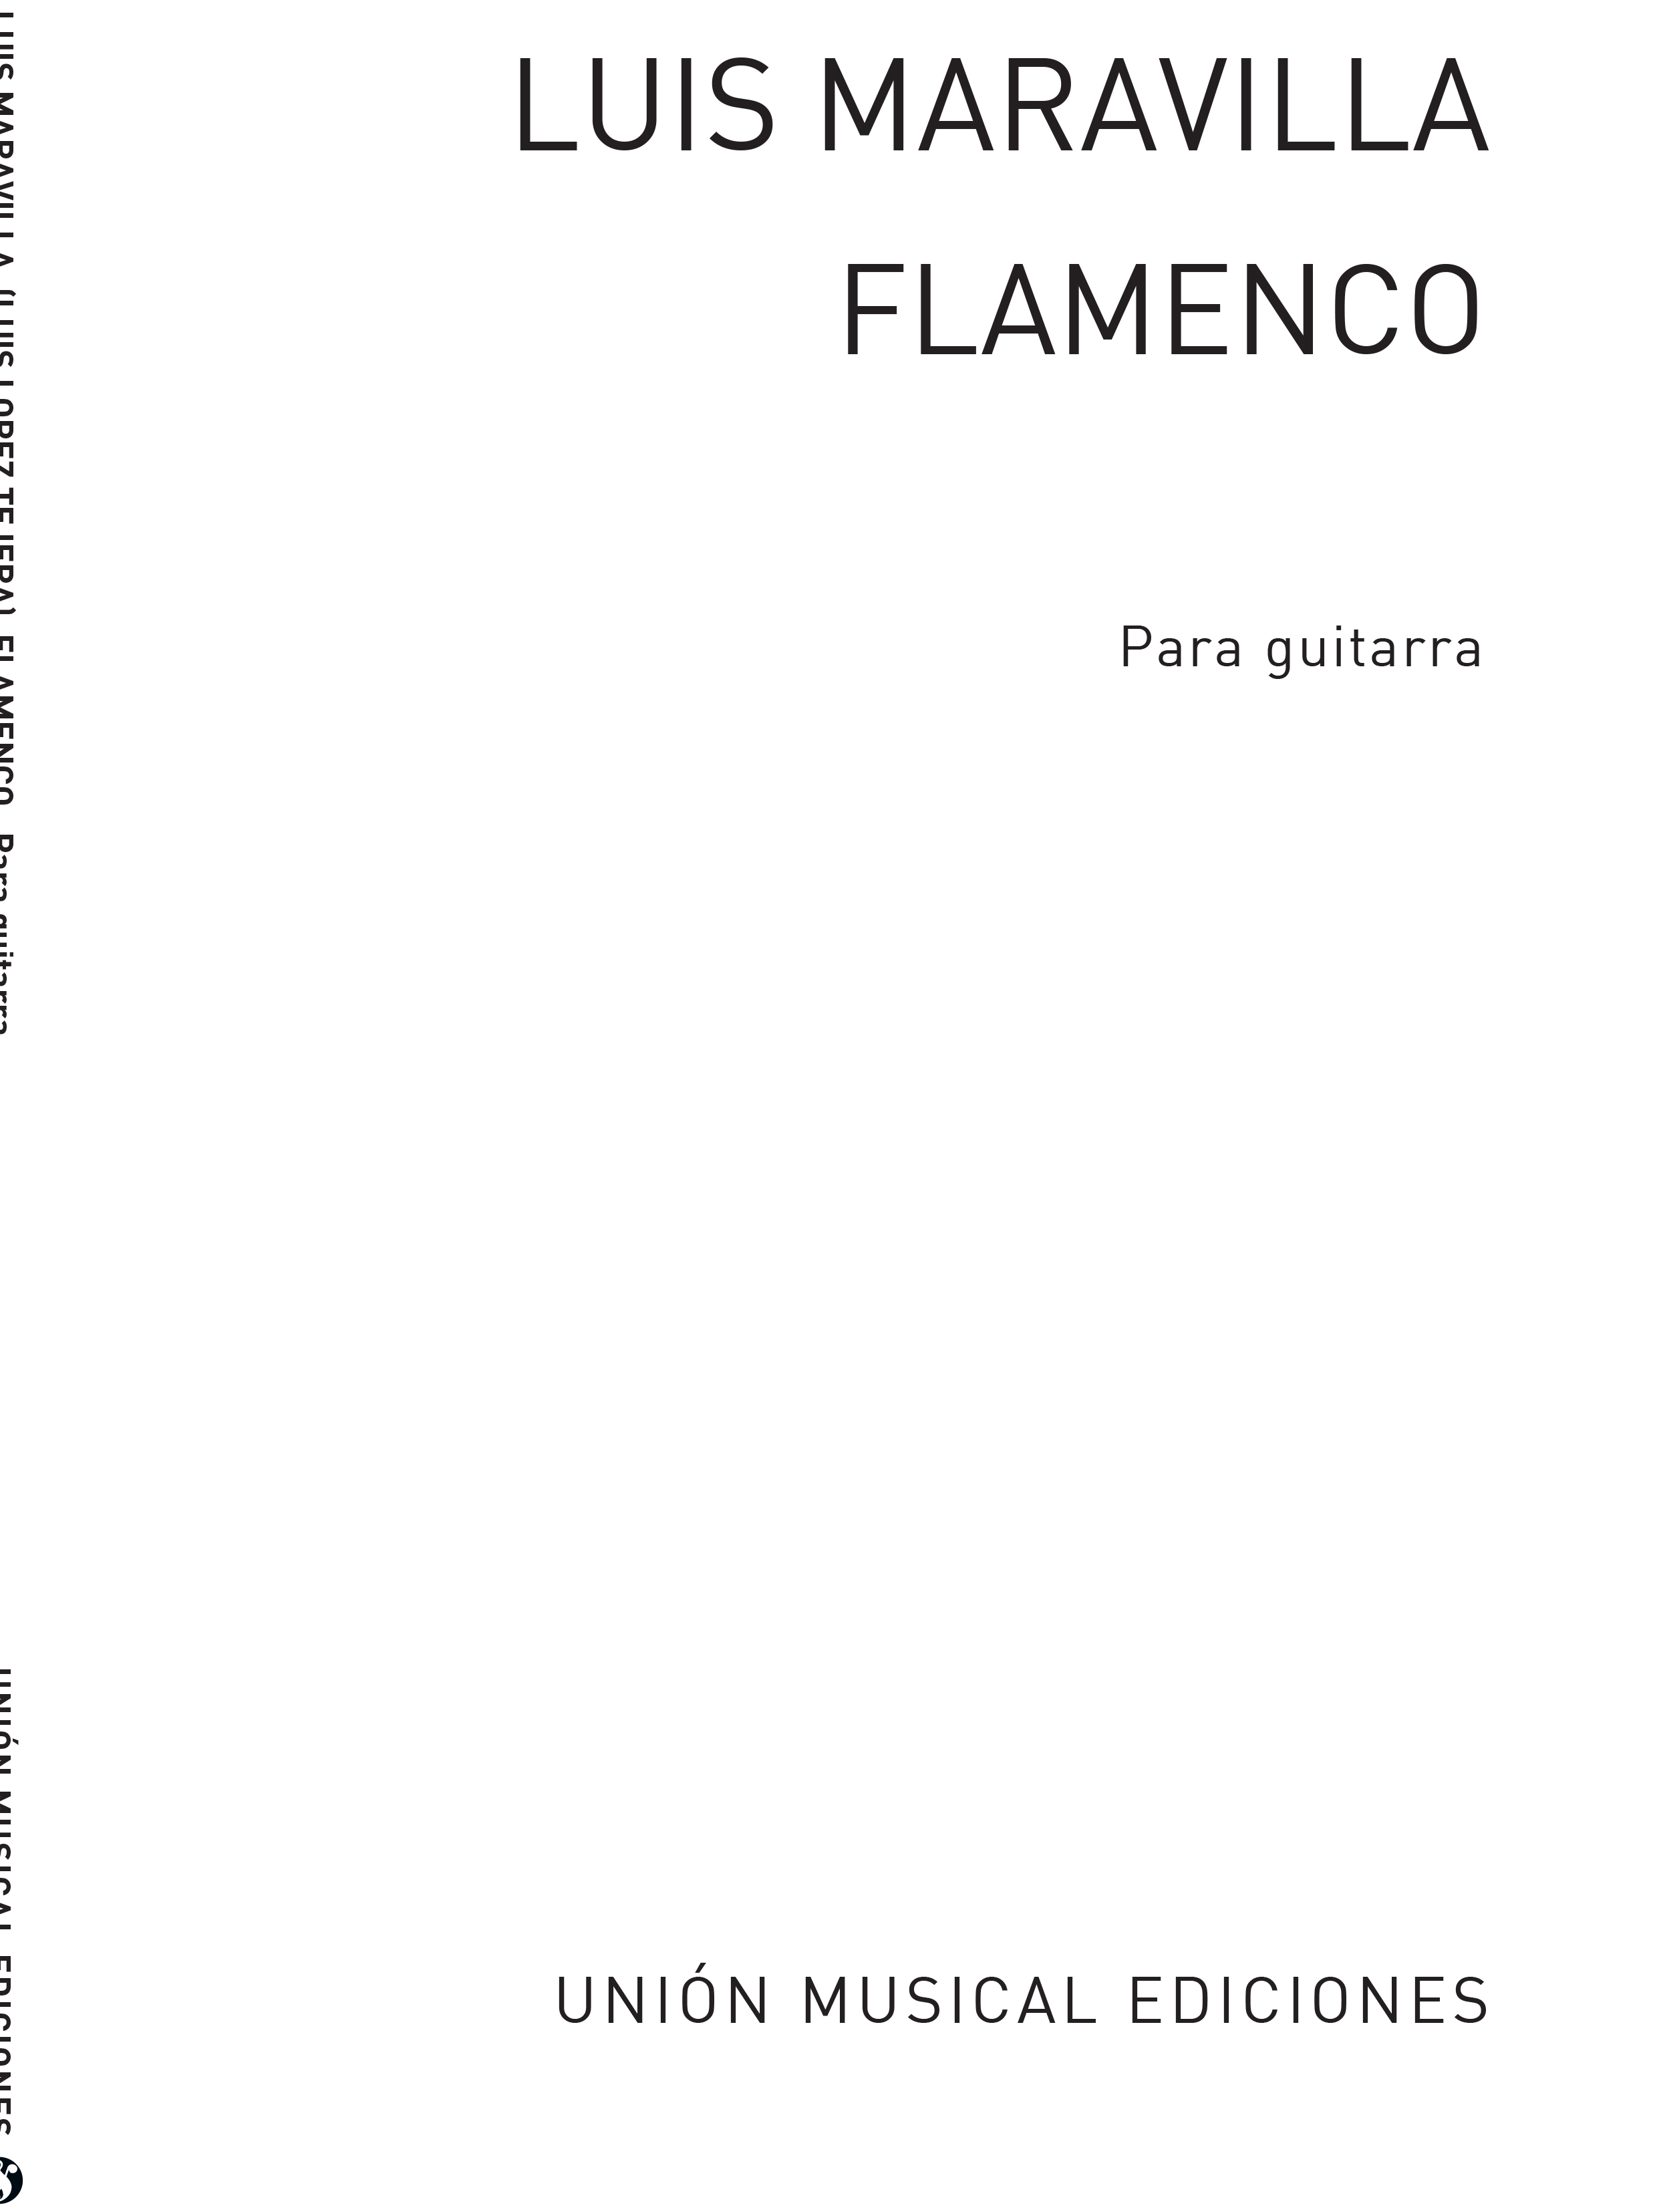 Luis Maravilla: Flamenco Album Para Guitarra Por Musica: Guitar: Instrumental